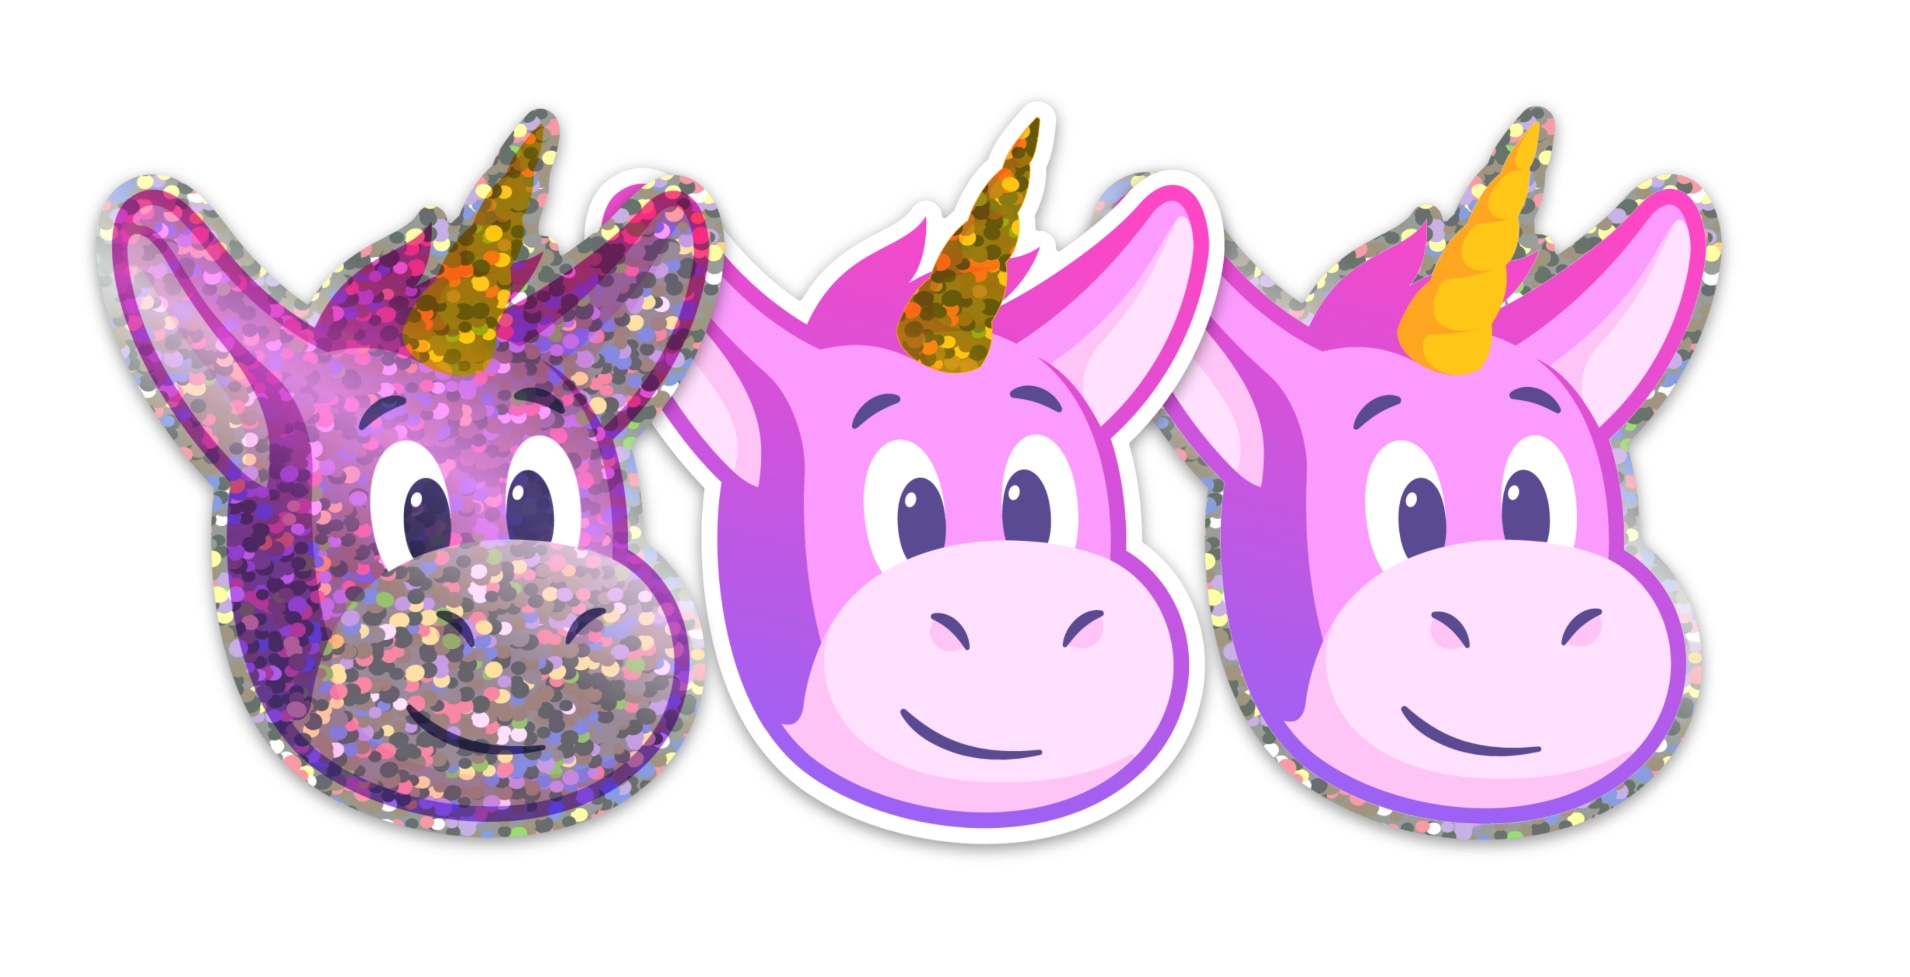 tres stickers glitter de unicornio mostrando diferentes efectos de brillantina